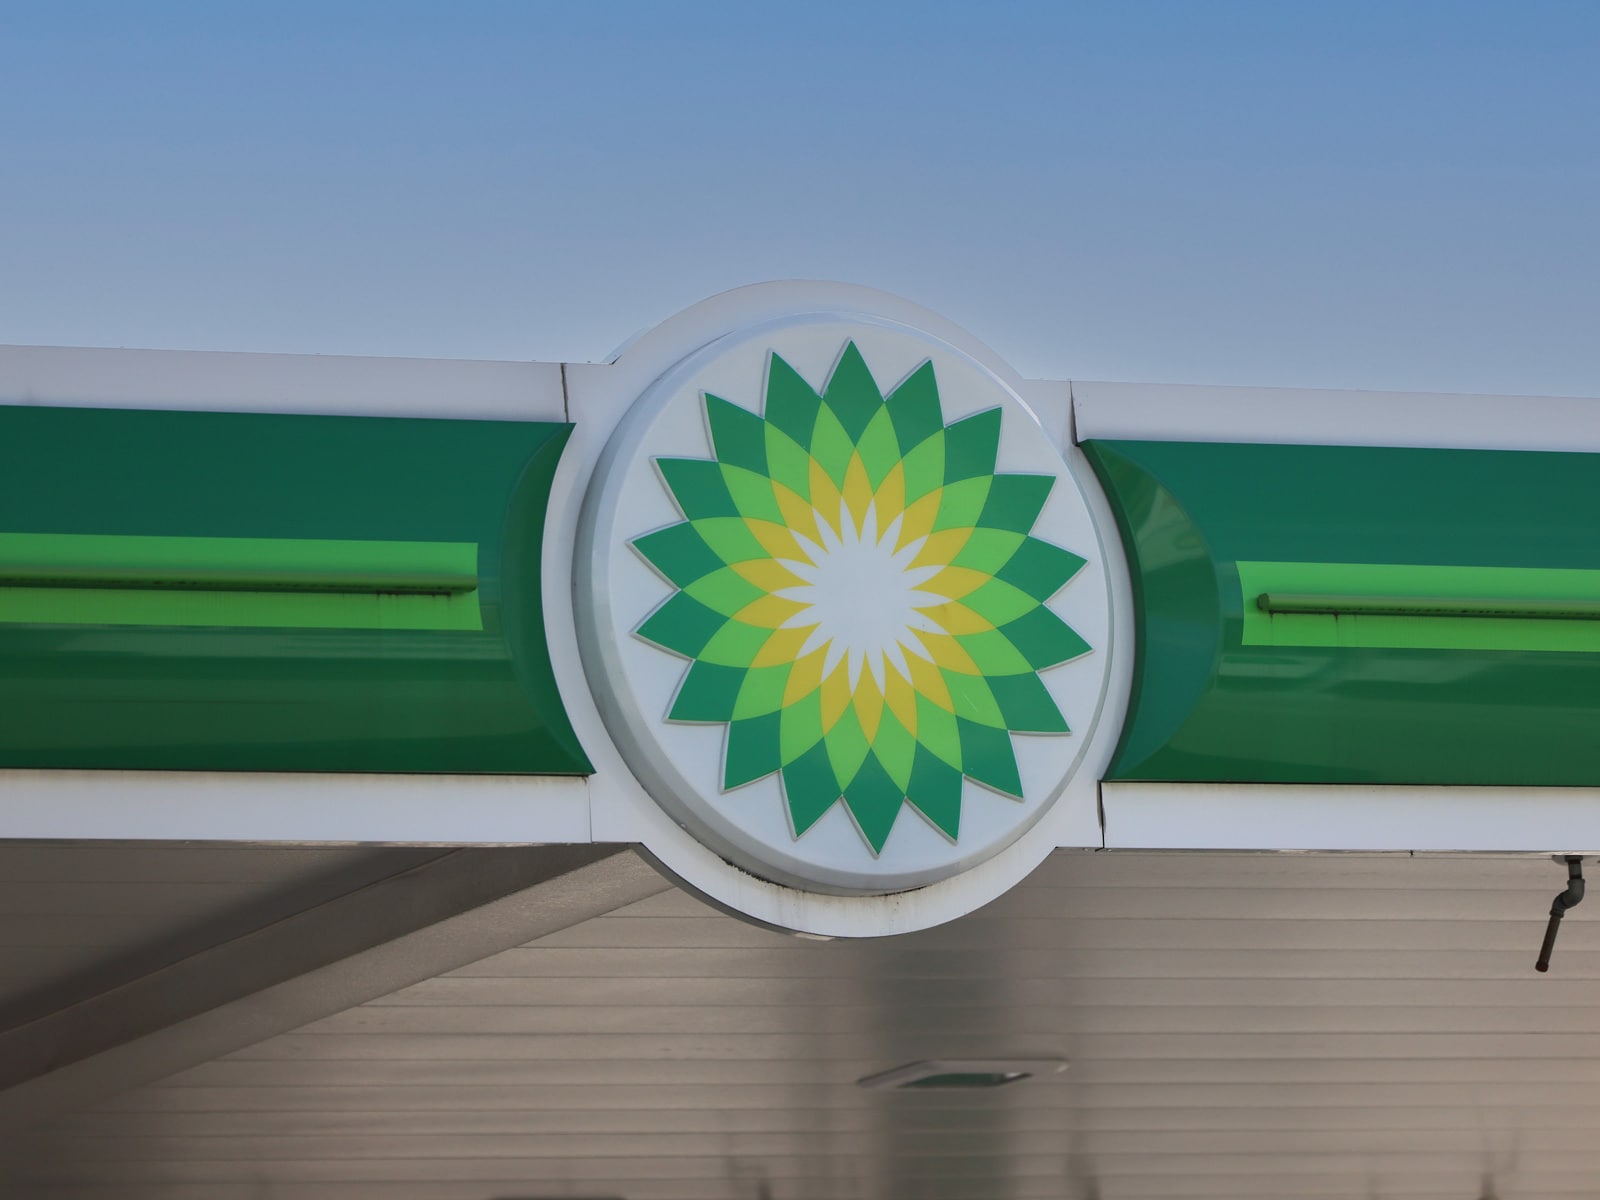 BP logo